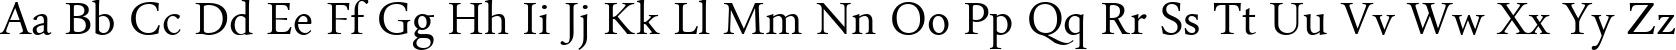 Пример написания английского алфавита шрифтом Arabic Typesetting